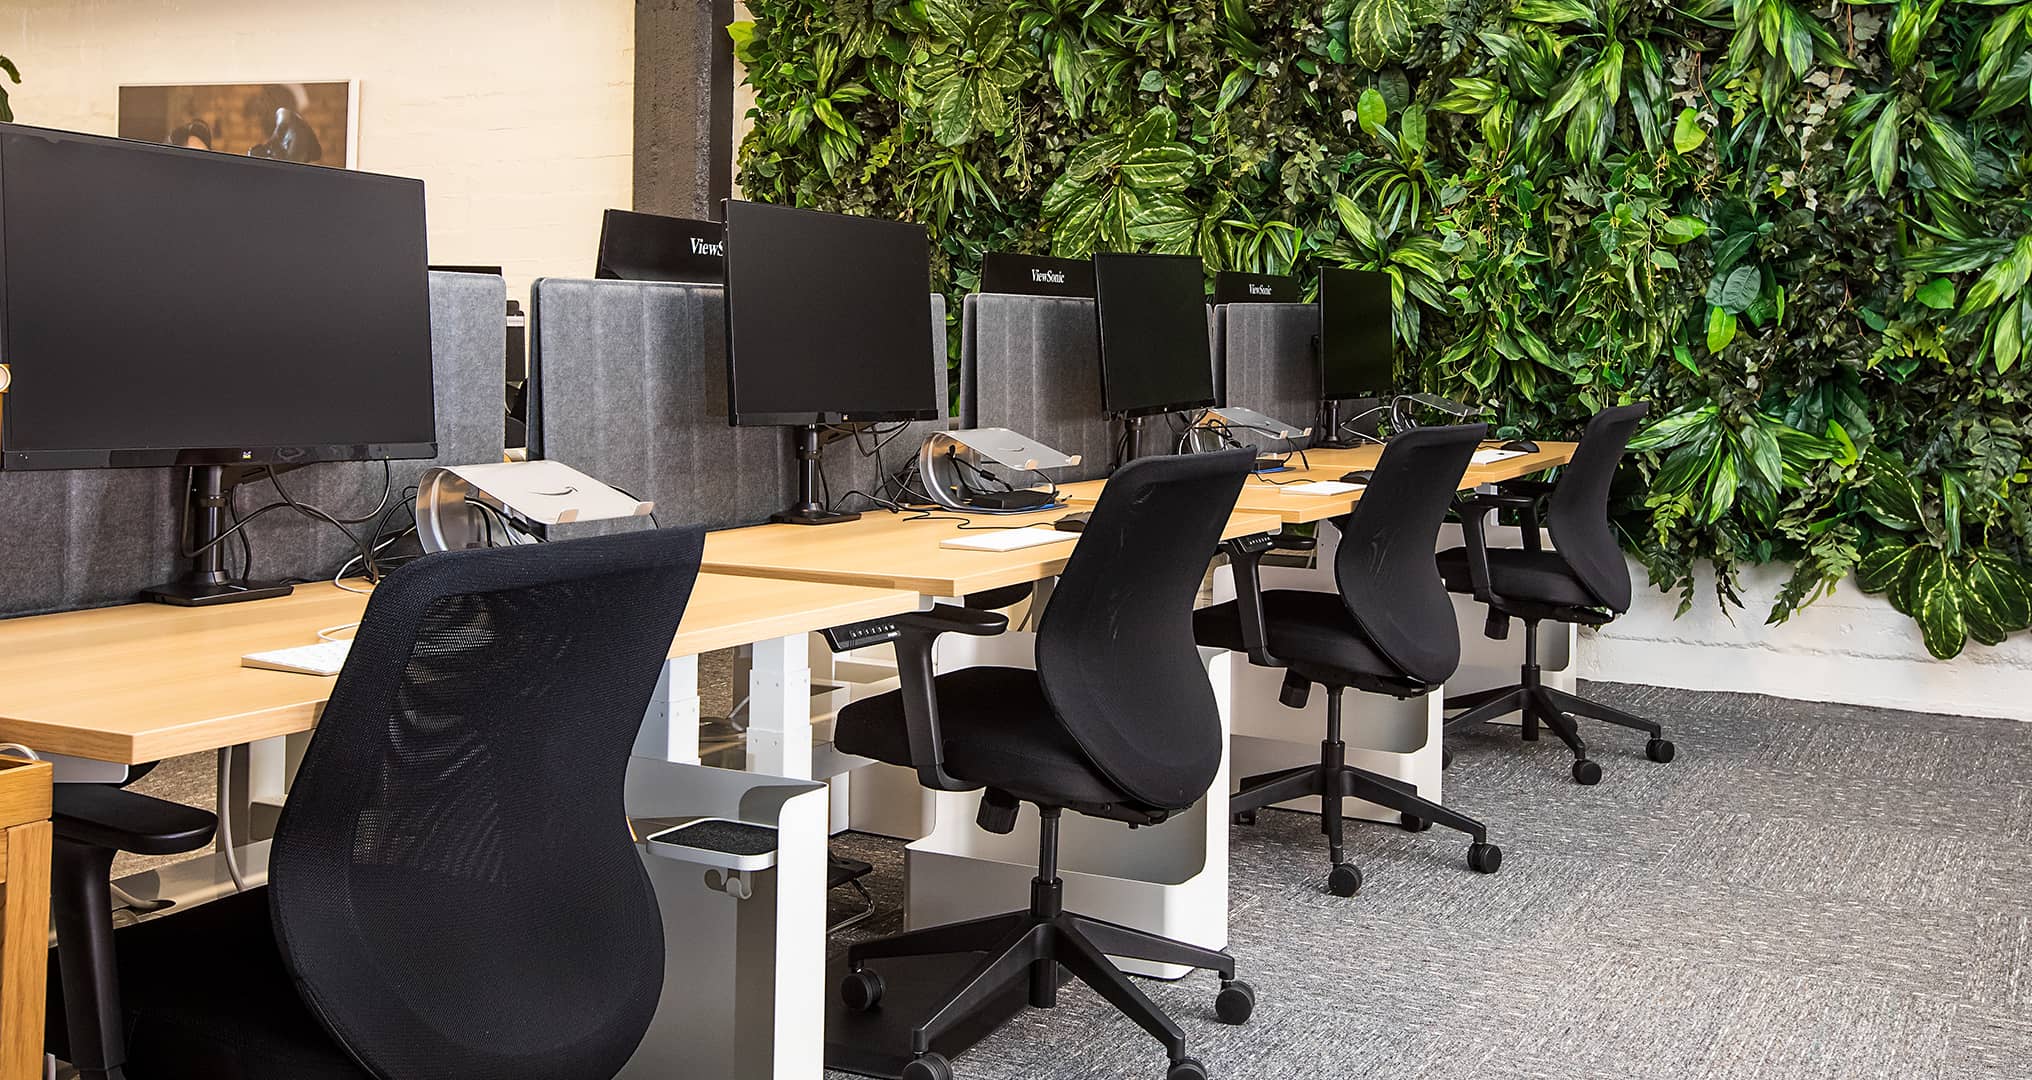 Office desks with ergonomic desk chairs